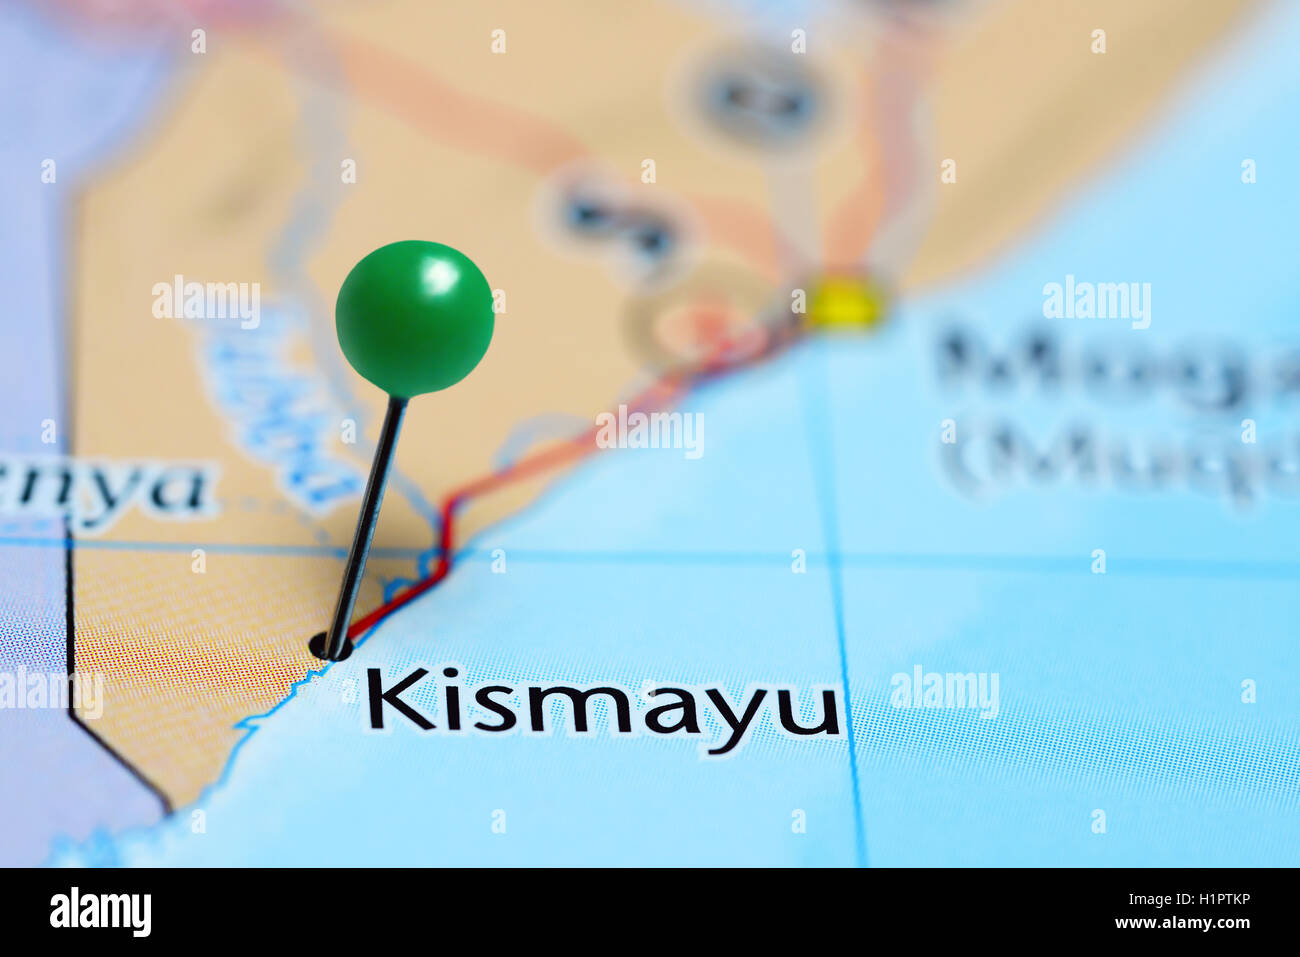 Kismayu pinned on a map of Somalia Stock Photo